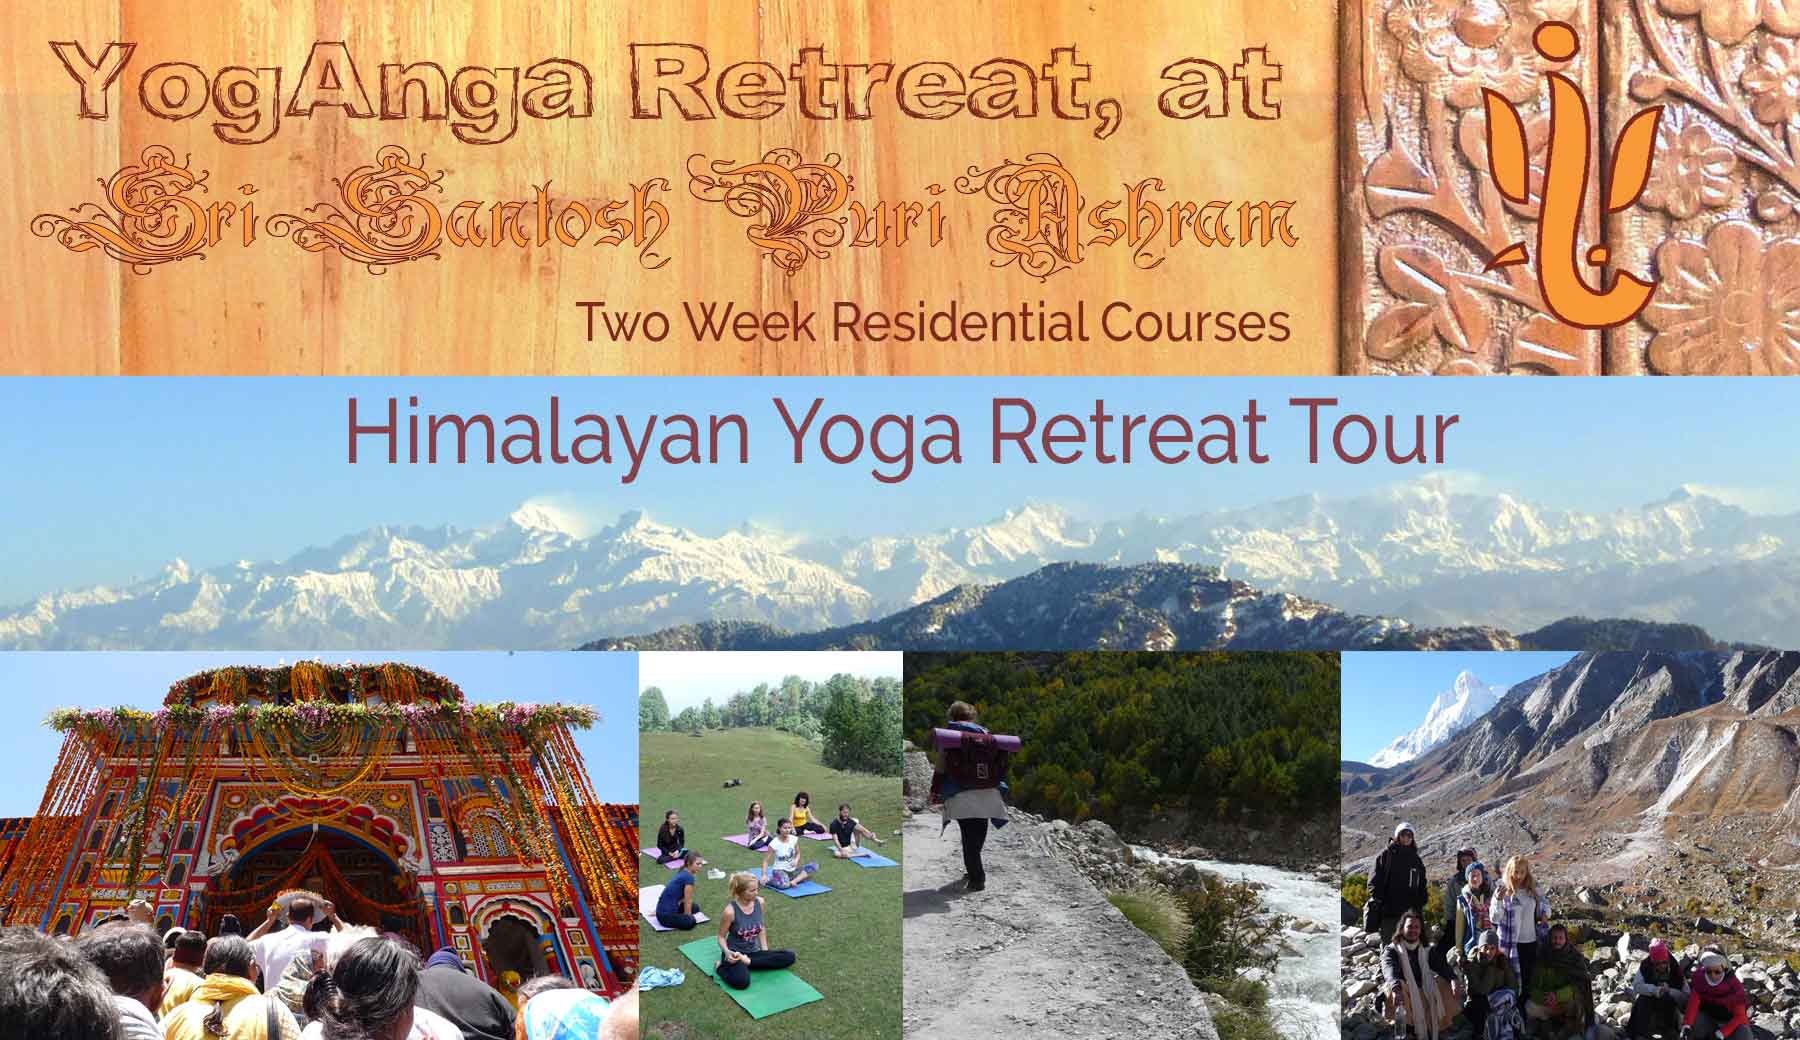 yoganga.org - YogAnga Retreat at Sri Santosh Puri Ashram - Himalayan Yoga Retreat Tour 2024 two week Residential Course, trekking, yoga, temple tours, adventure